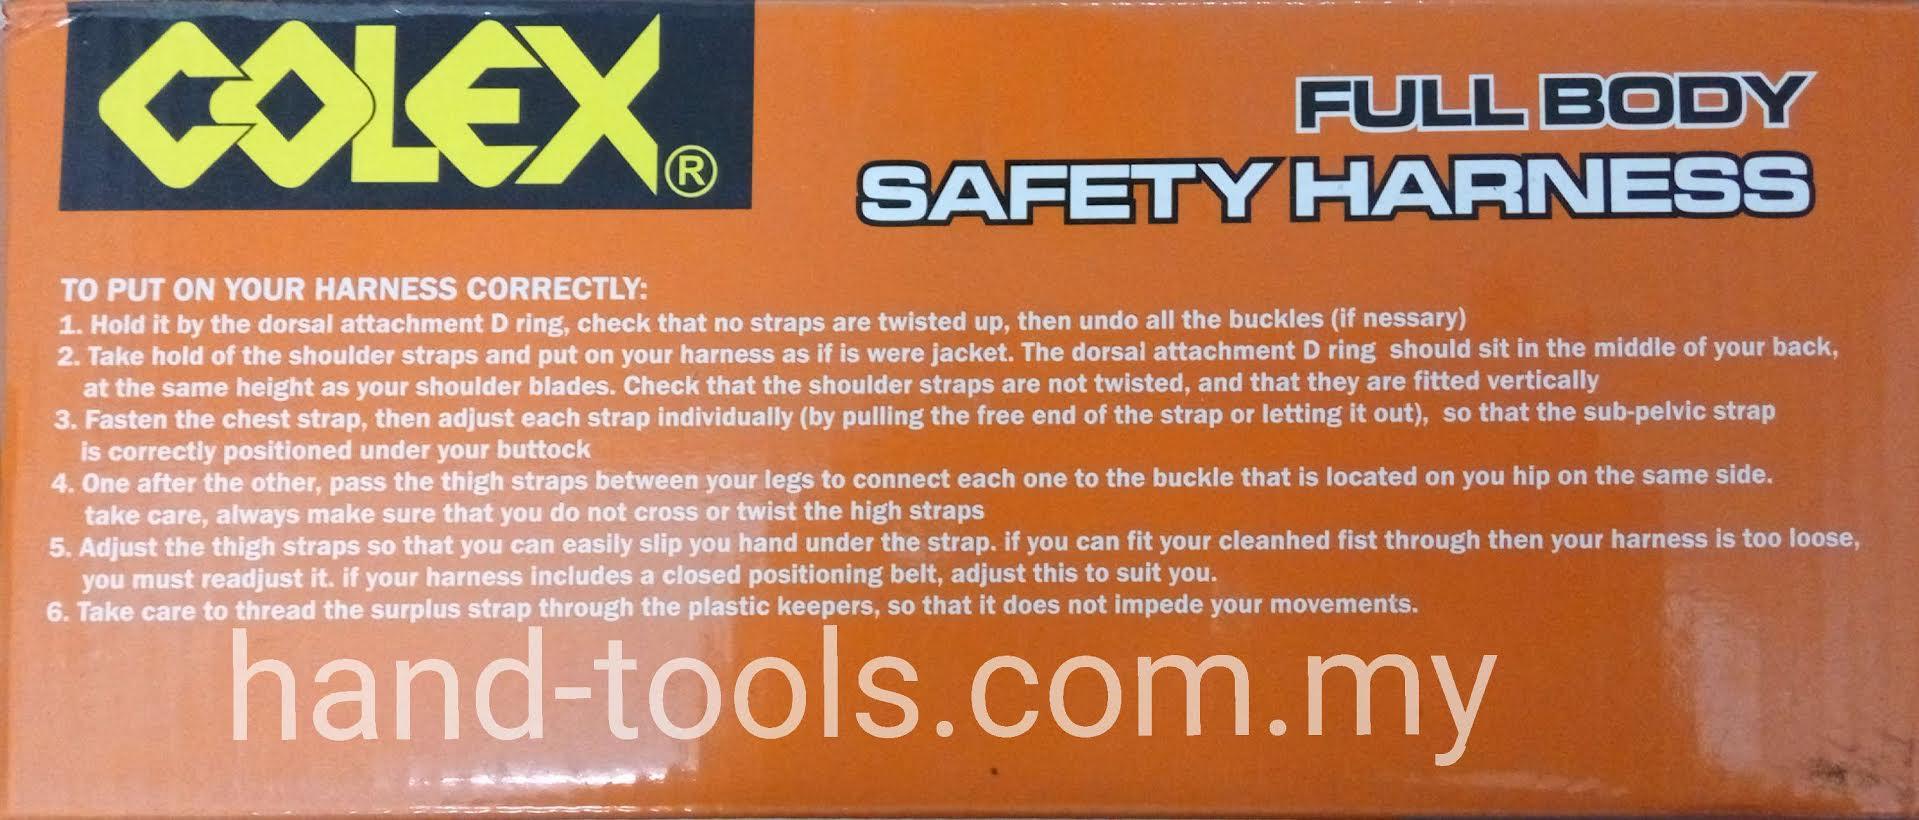 COLEX SHH-399 Full Body Safety Harness C/W Big Hook